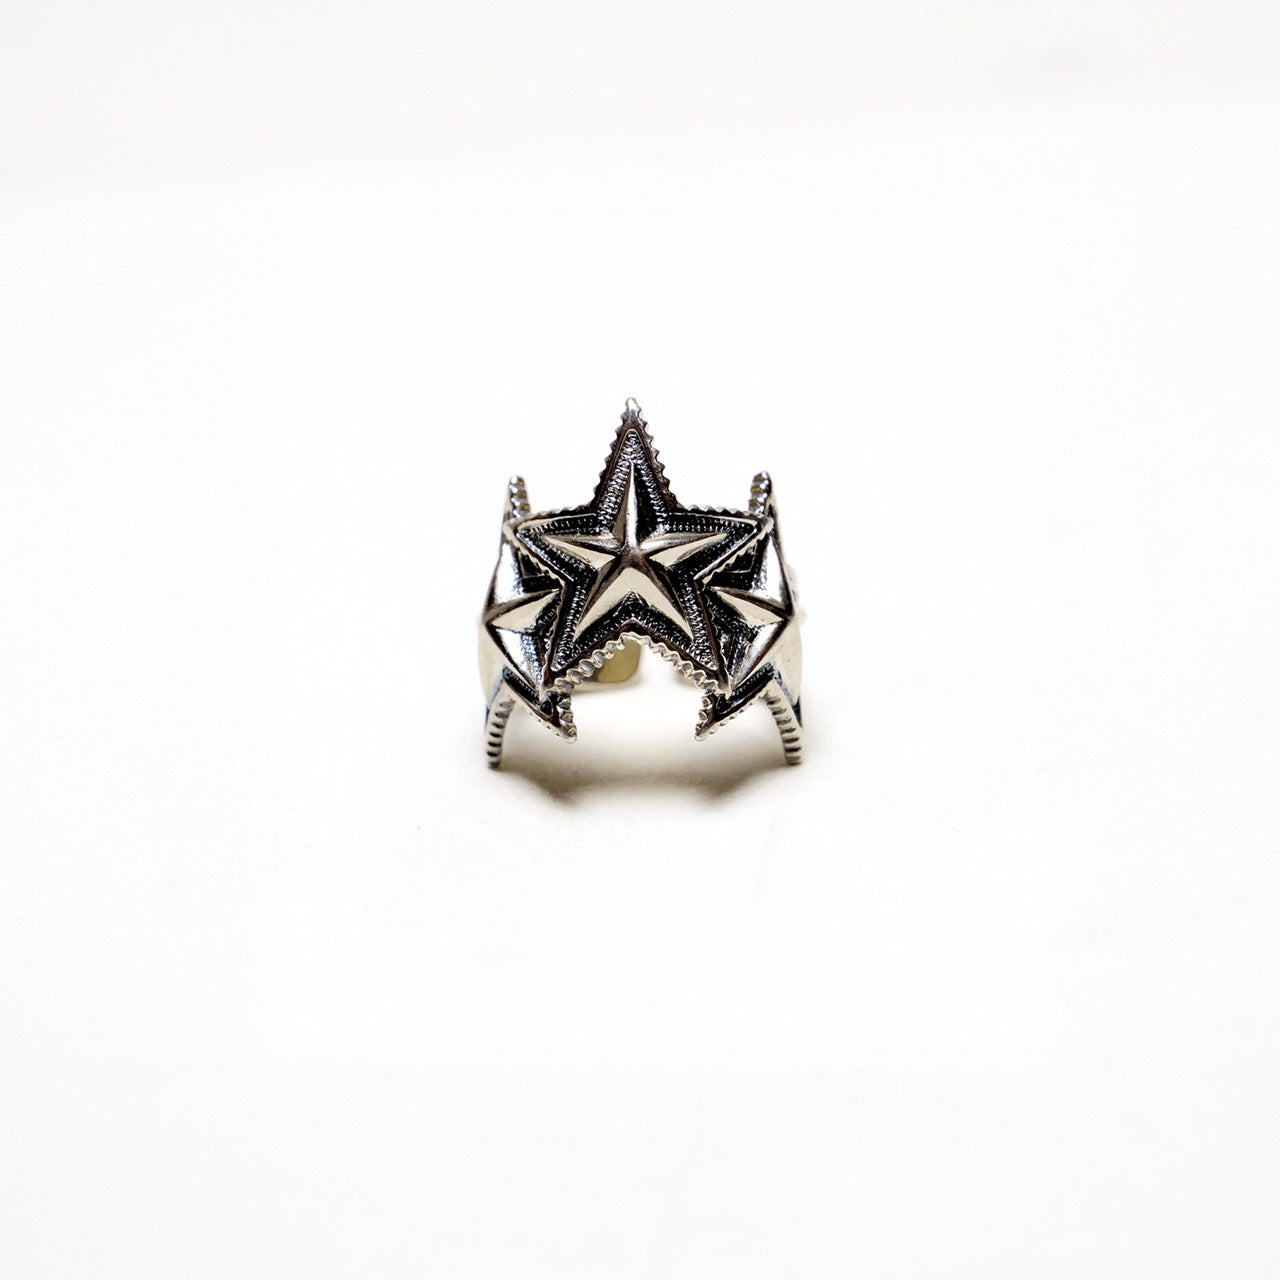 Pentagram Ring in Sterling Silver